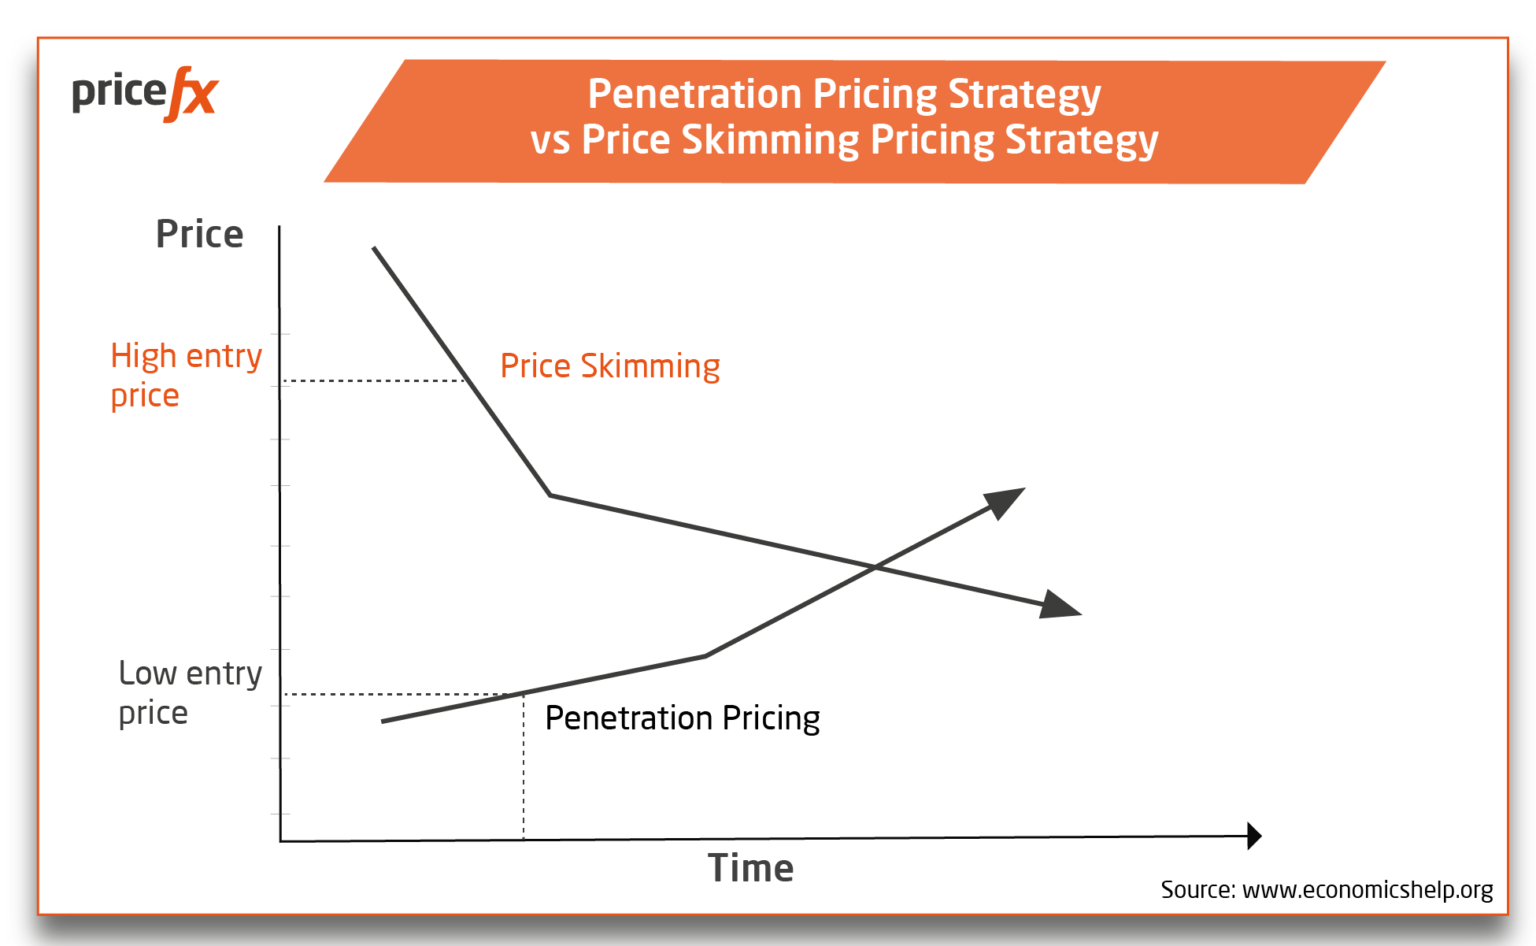 penetration pricing marketing